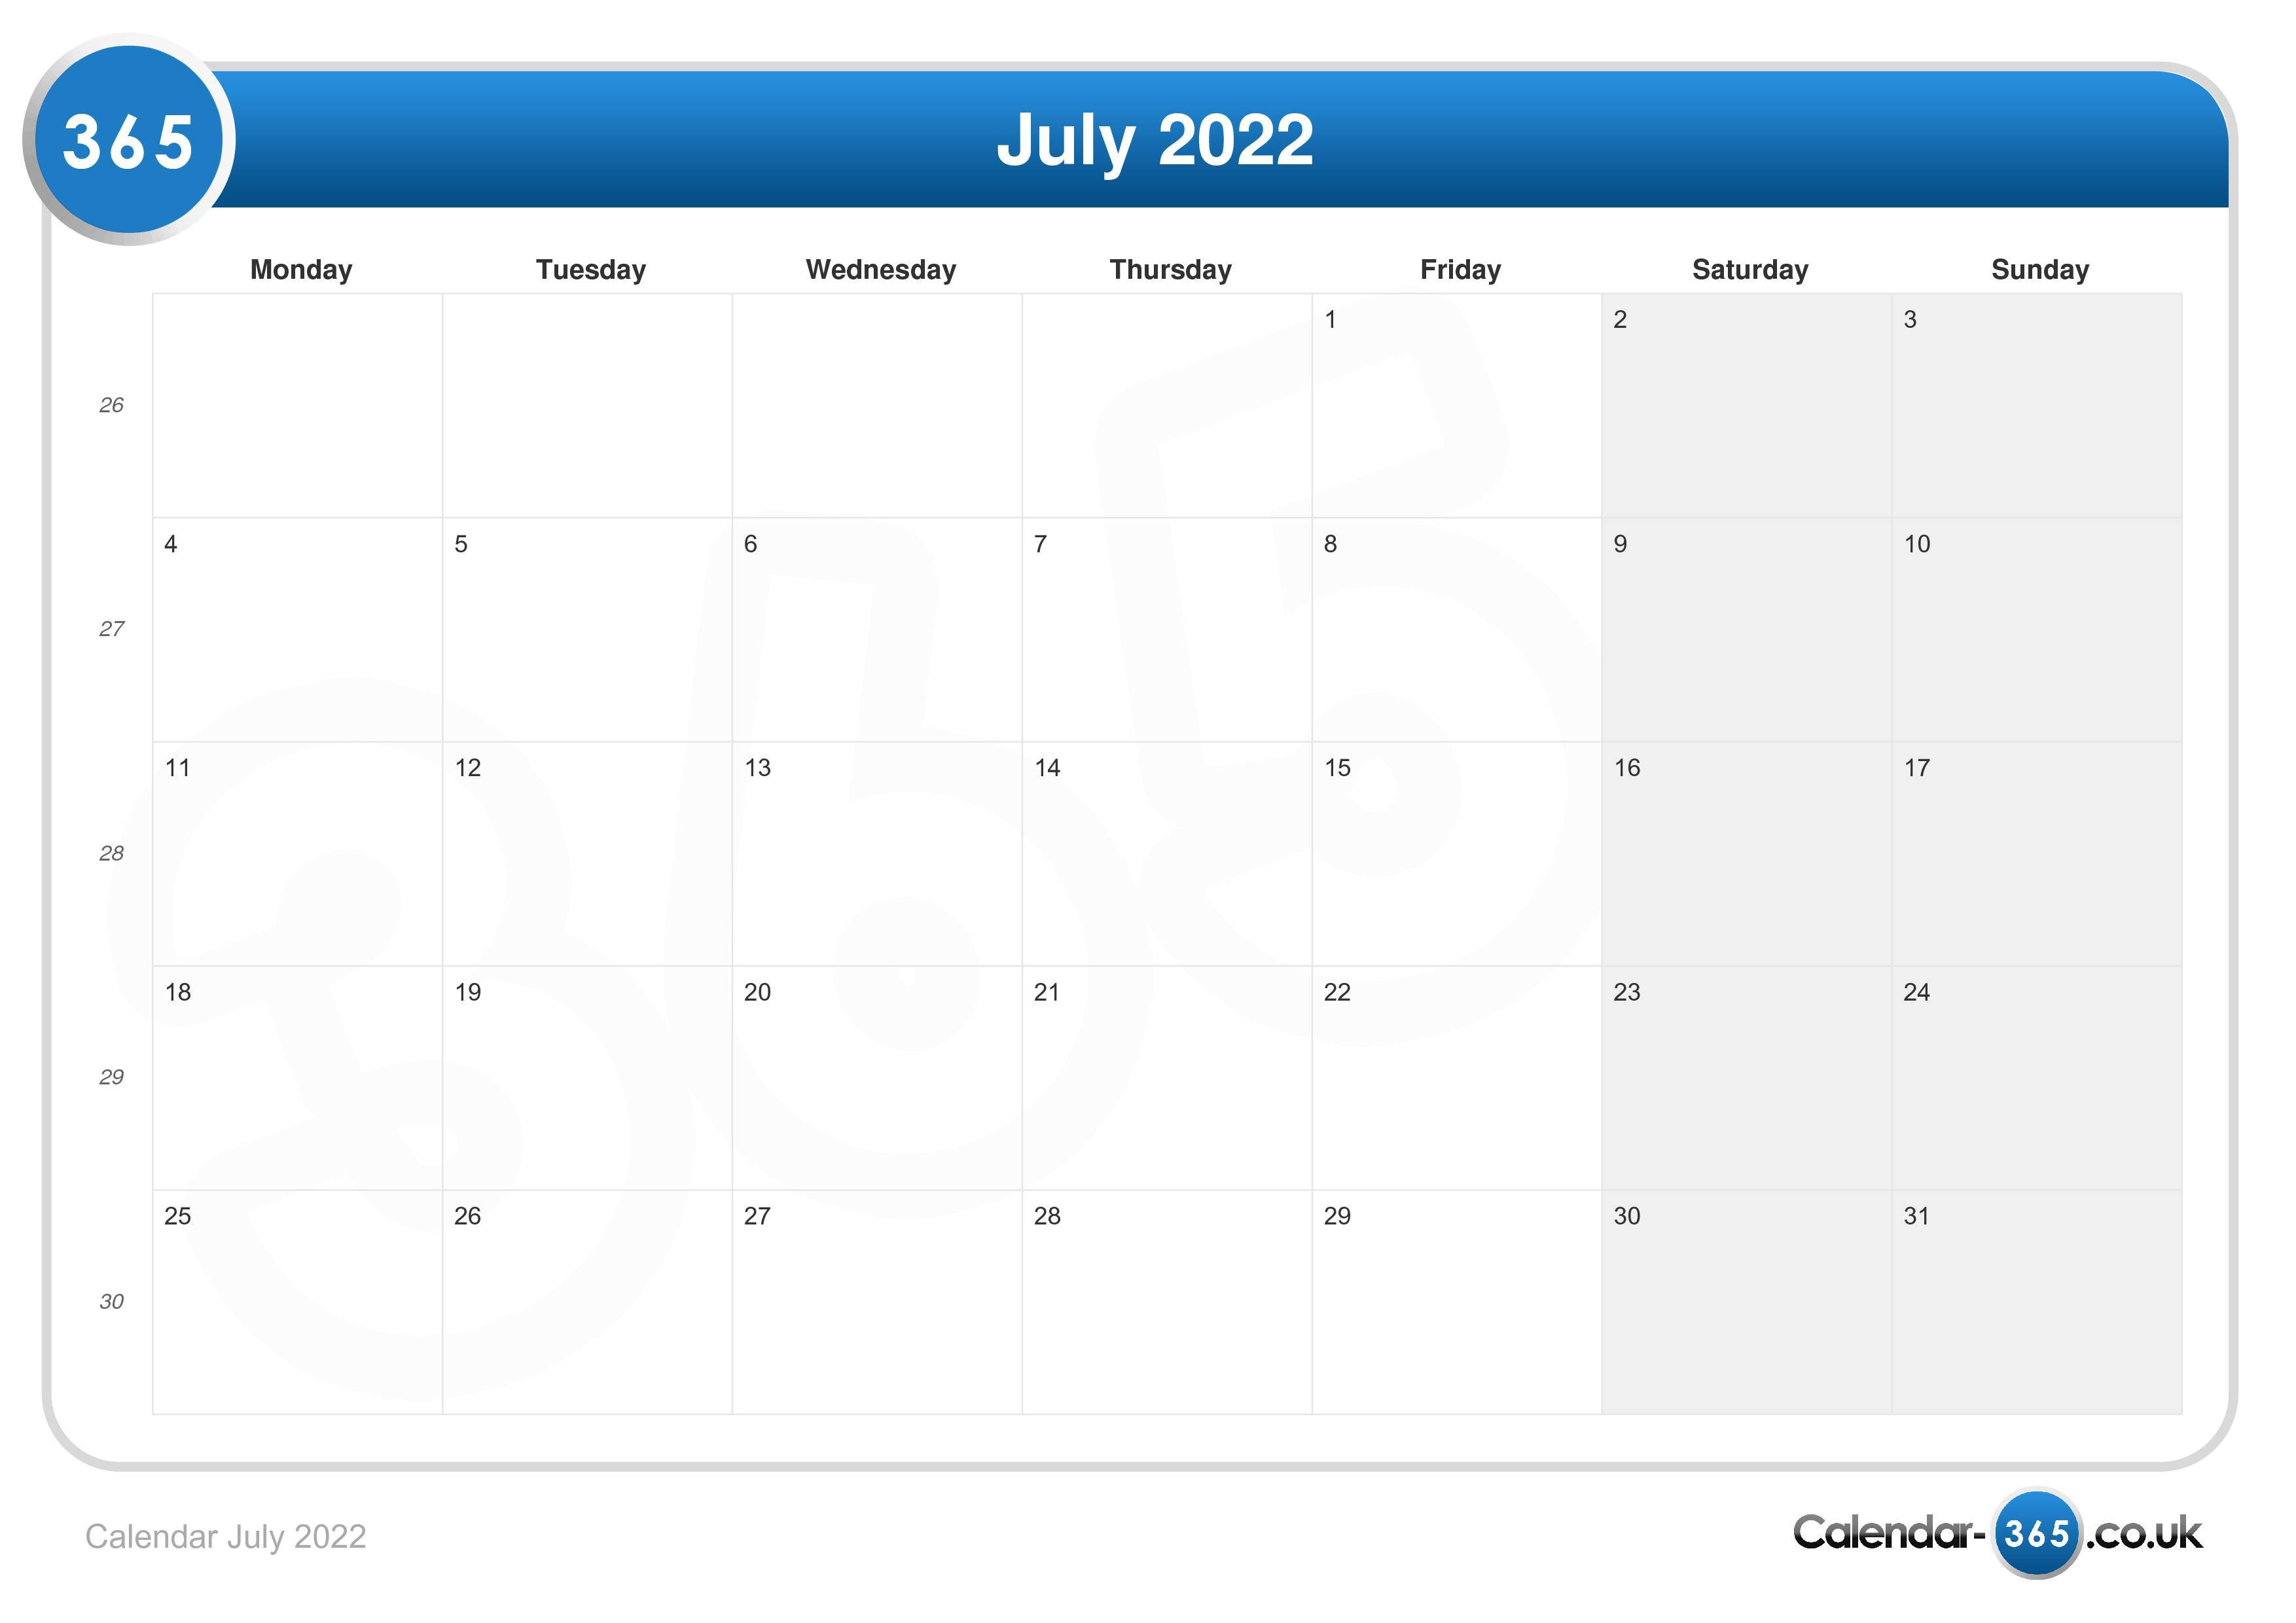 Calendar July 2022